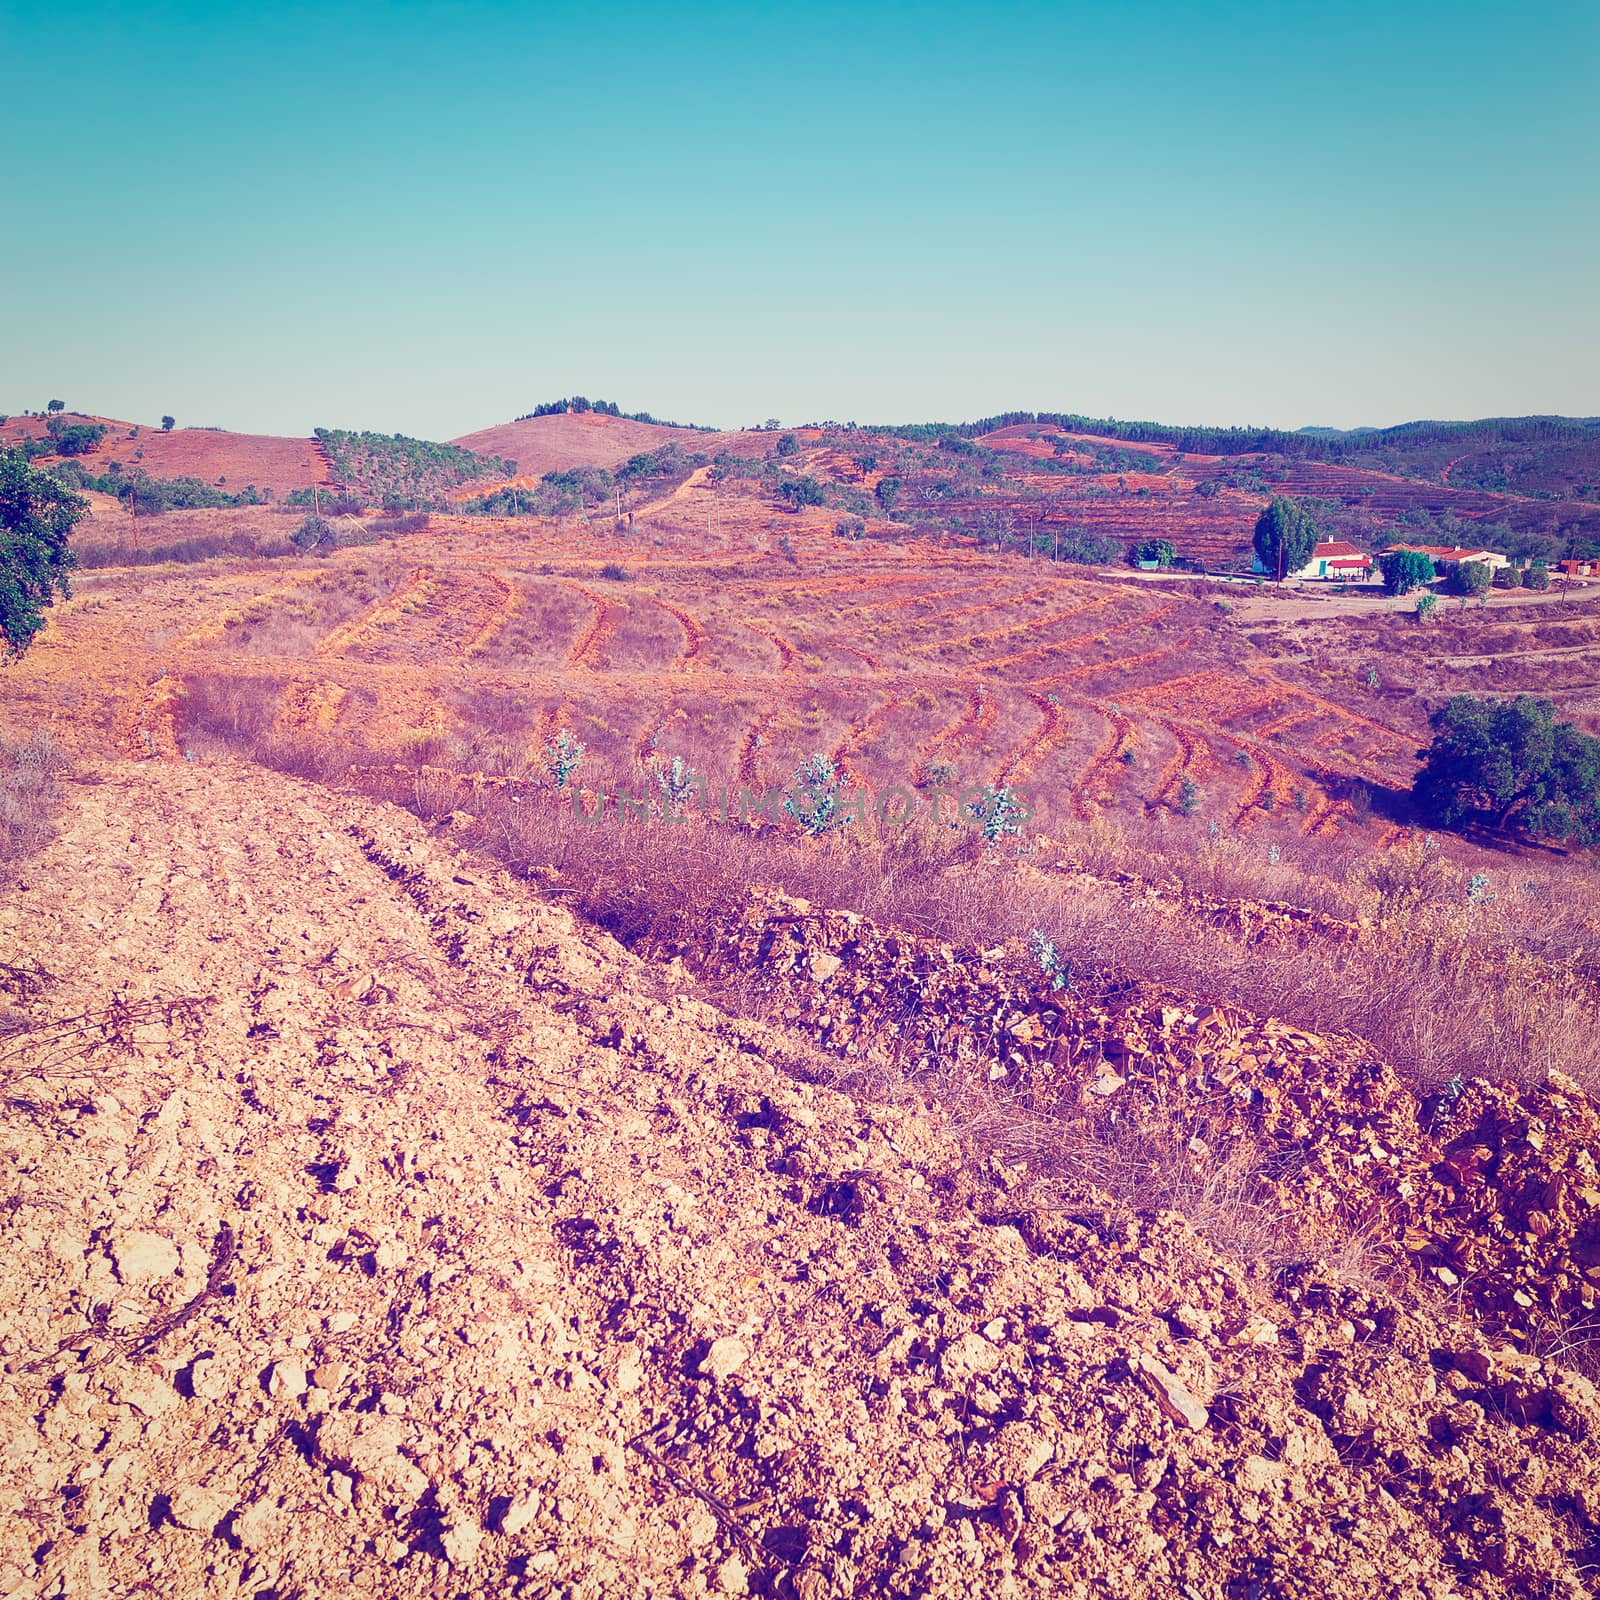 Preparation Plowed Terraces for Planting Vines in Portugal, Instagram Effect